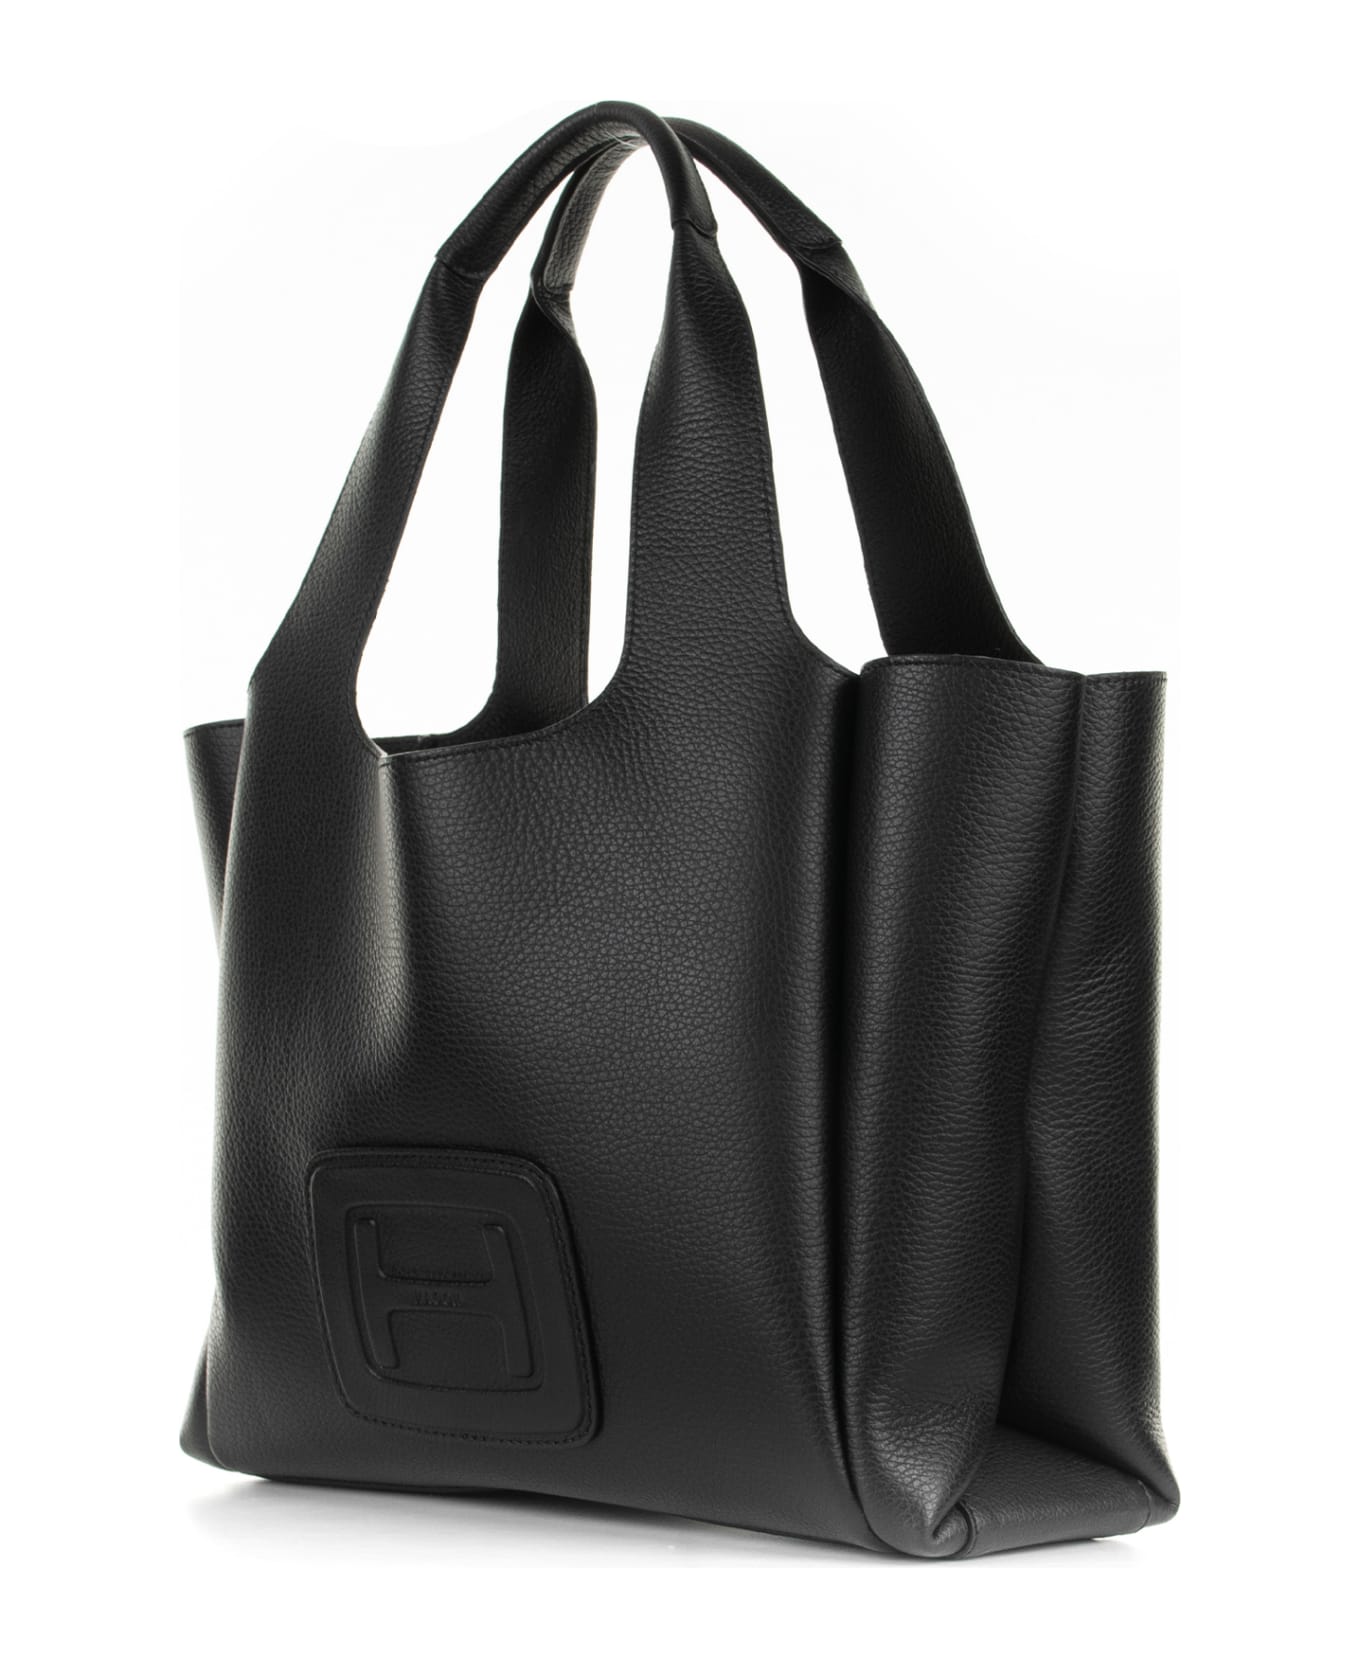 Hogan Medium Black Leather Shopping Bag - NERO